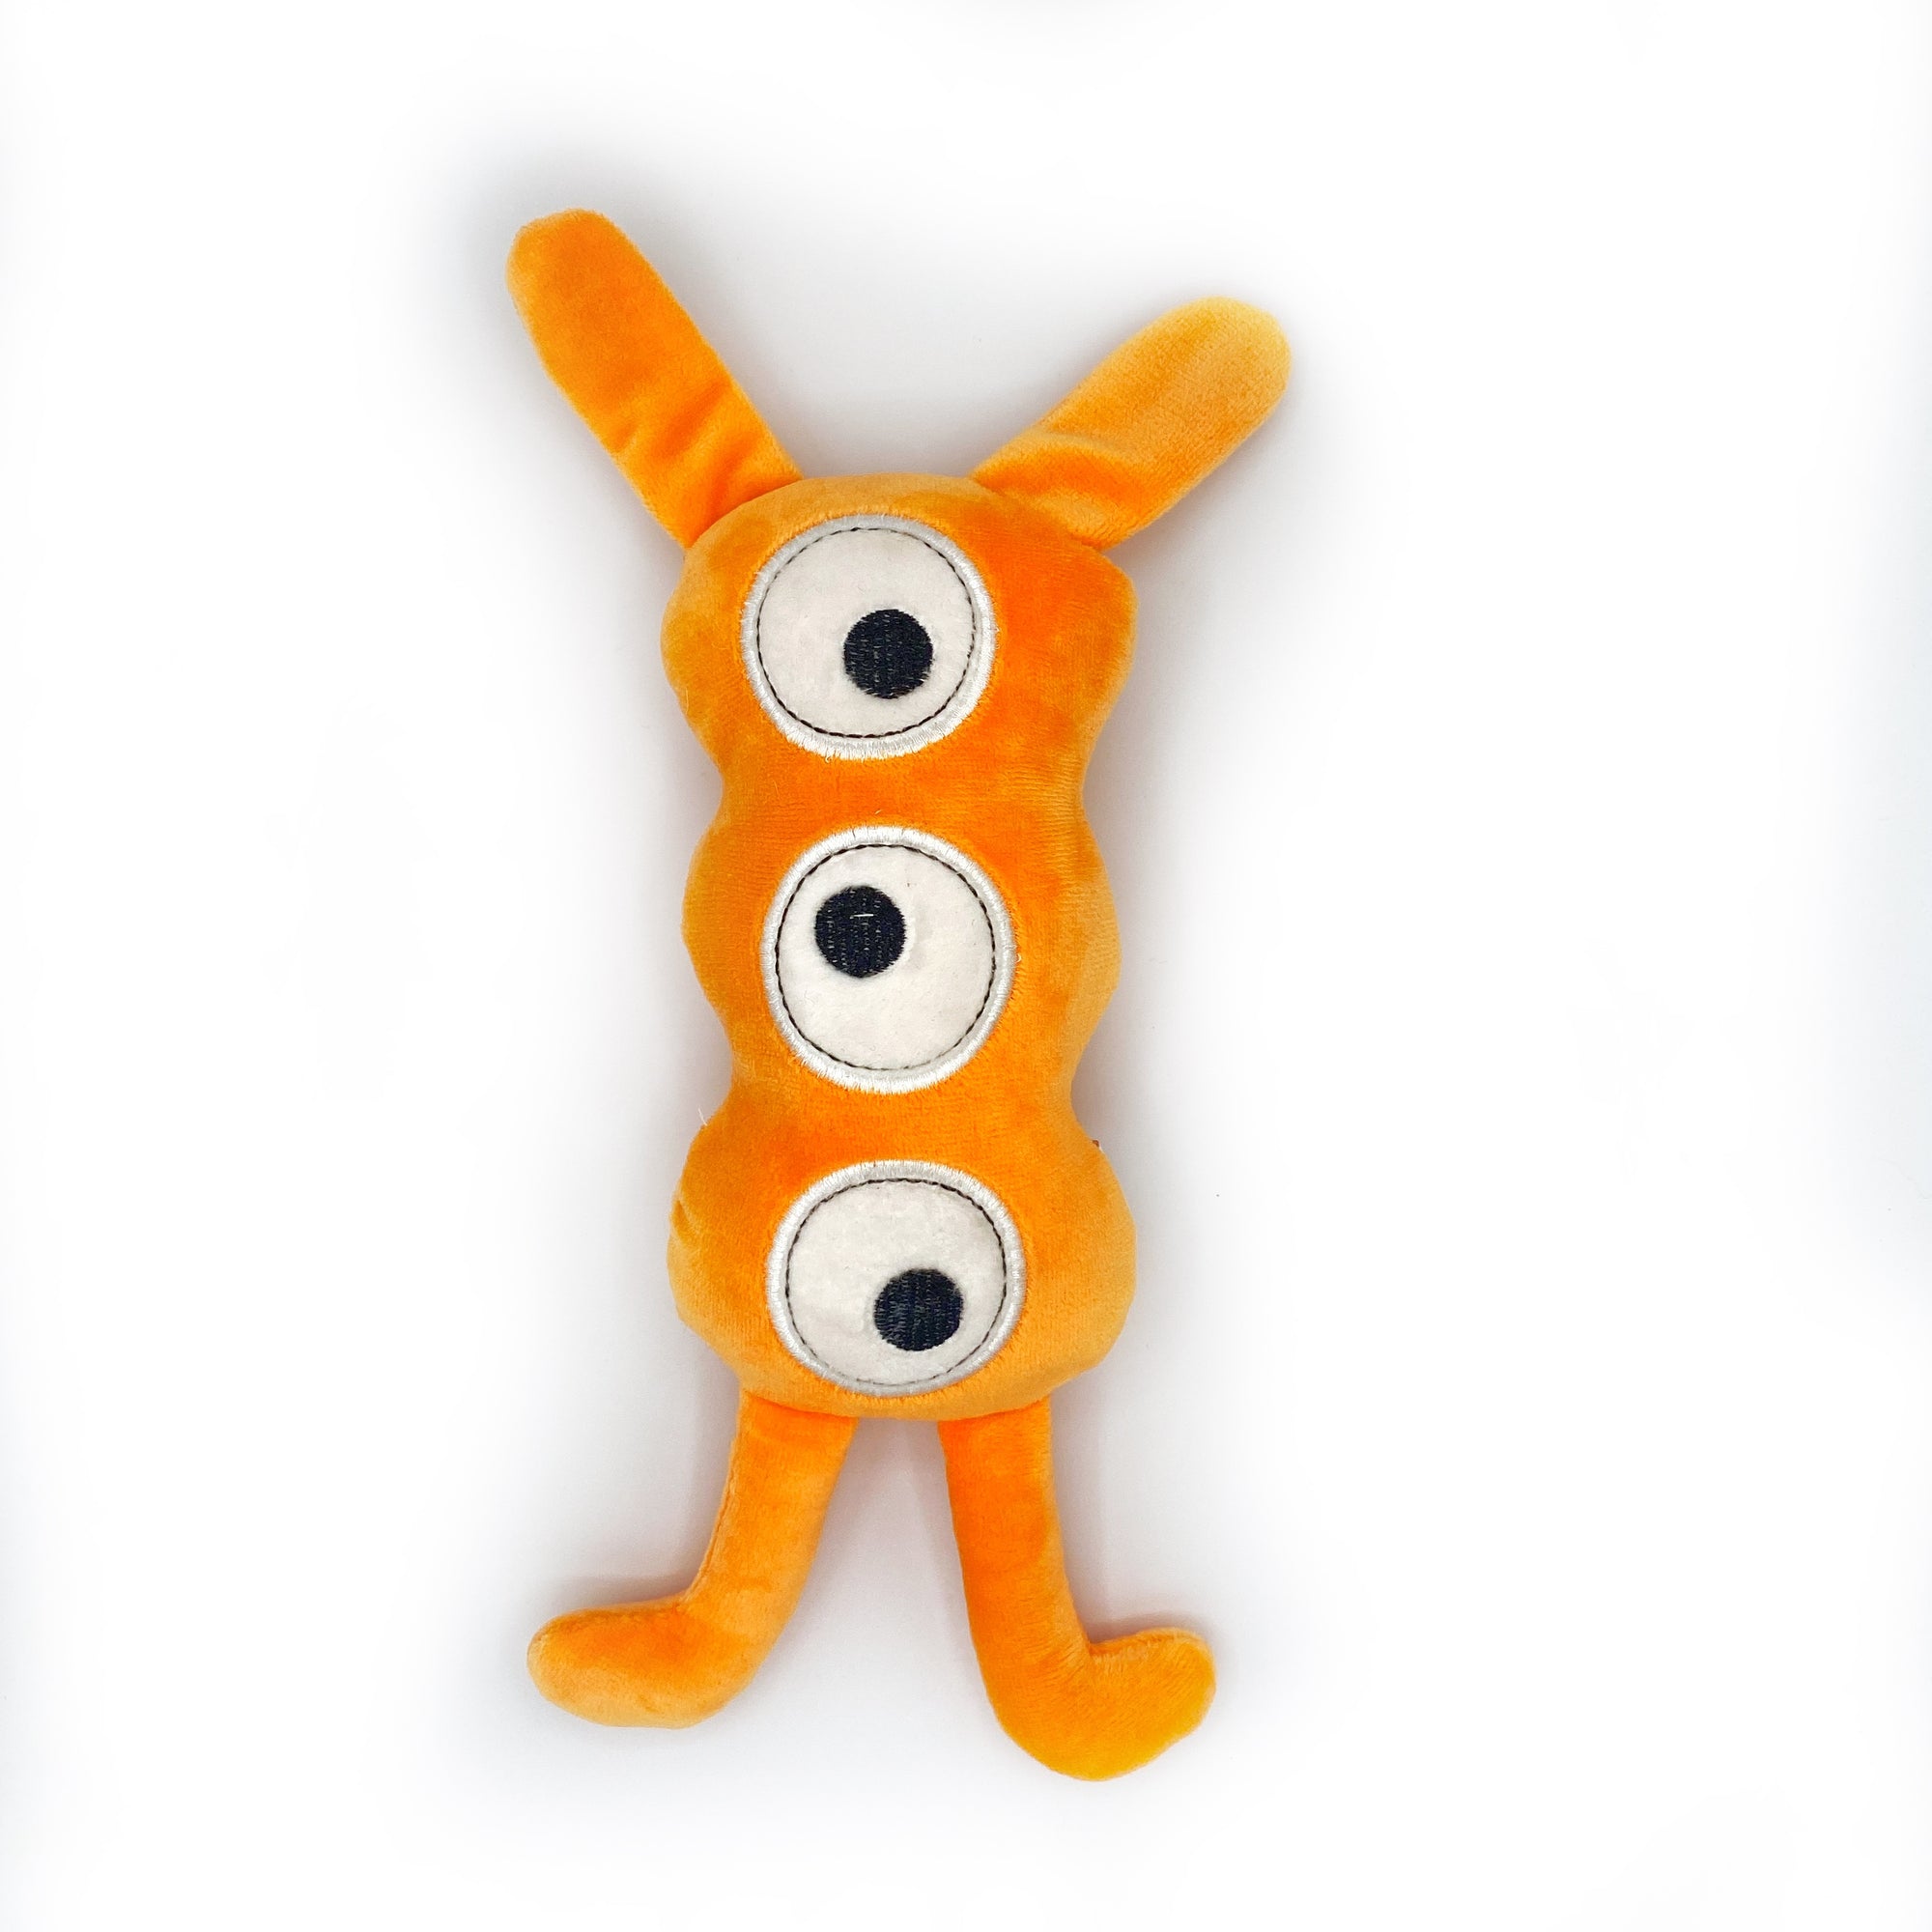 Bud'z "Atomic" Orange Plush Monster Dog Toy